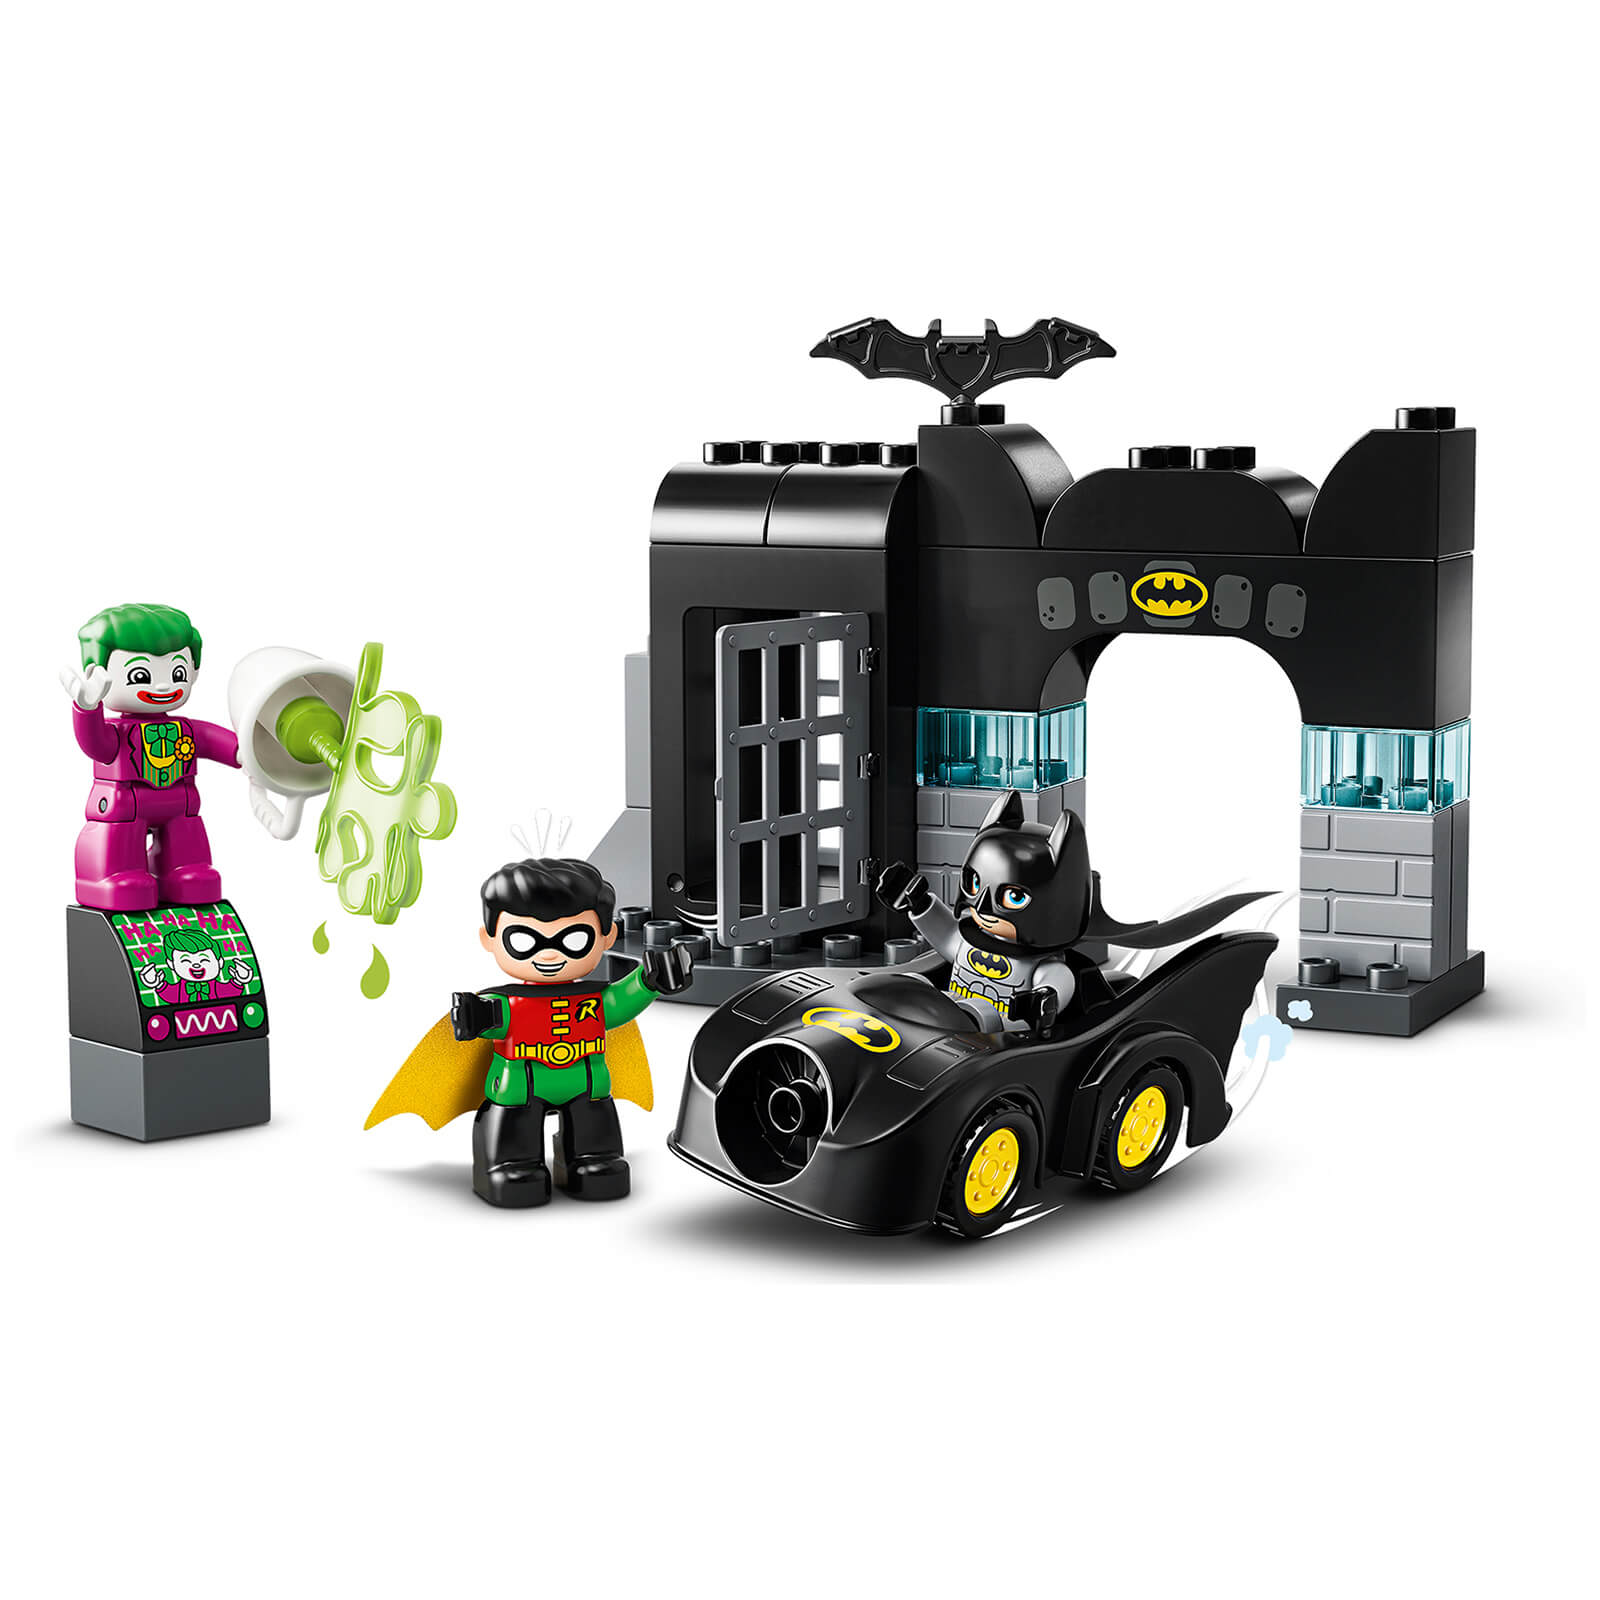 LEGO DUPLO Super Heroes: Batcave (10919)